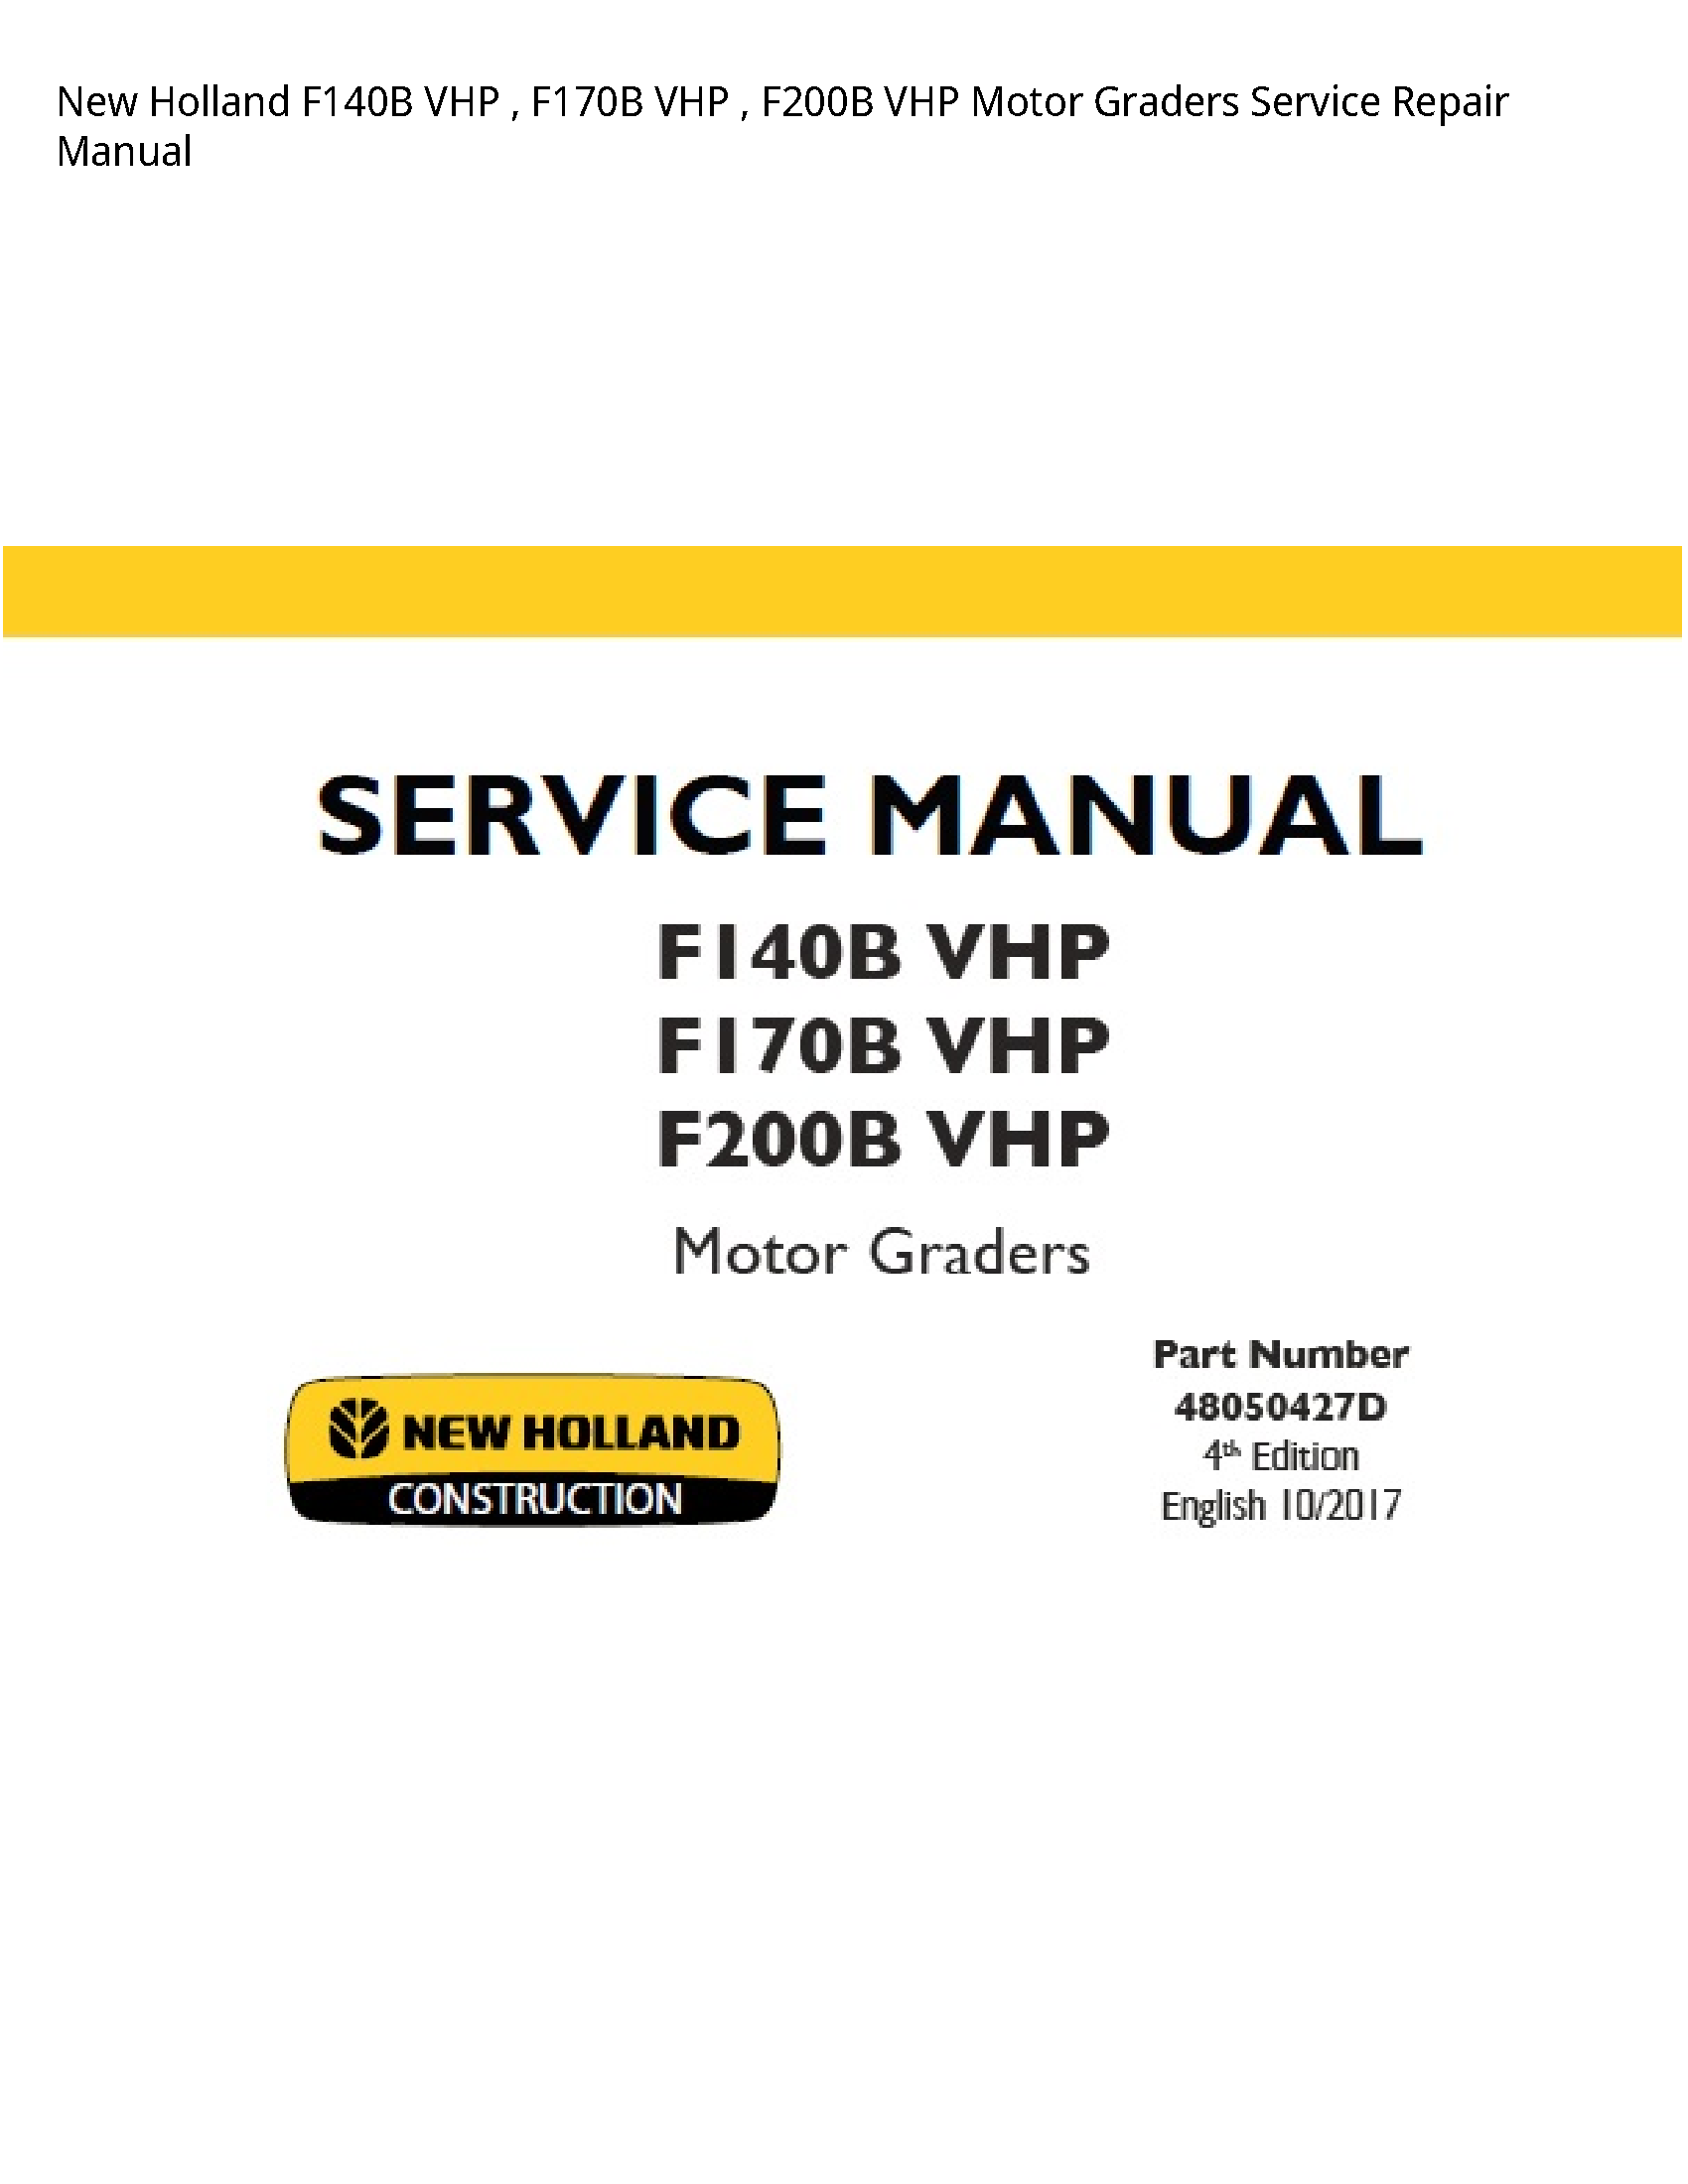 New Holland F140B VHP VHP VHP Motor Graders manual